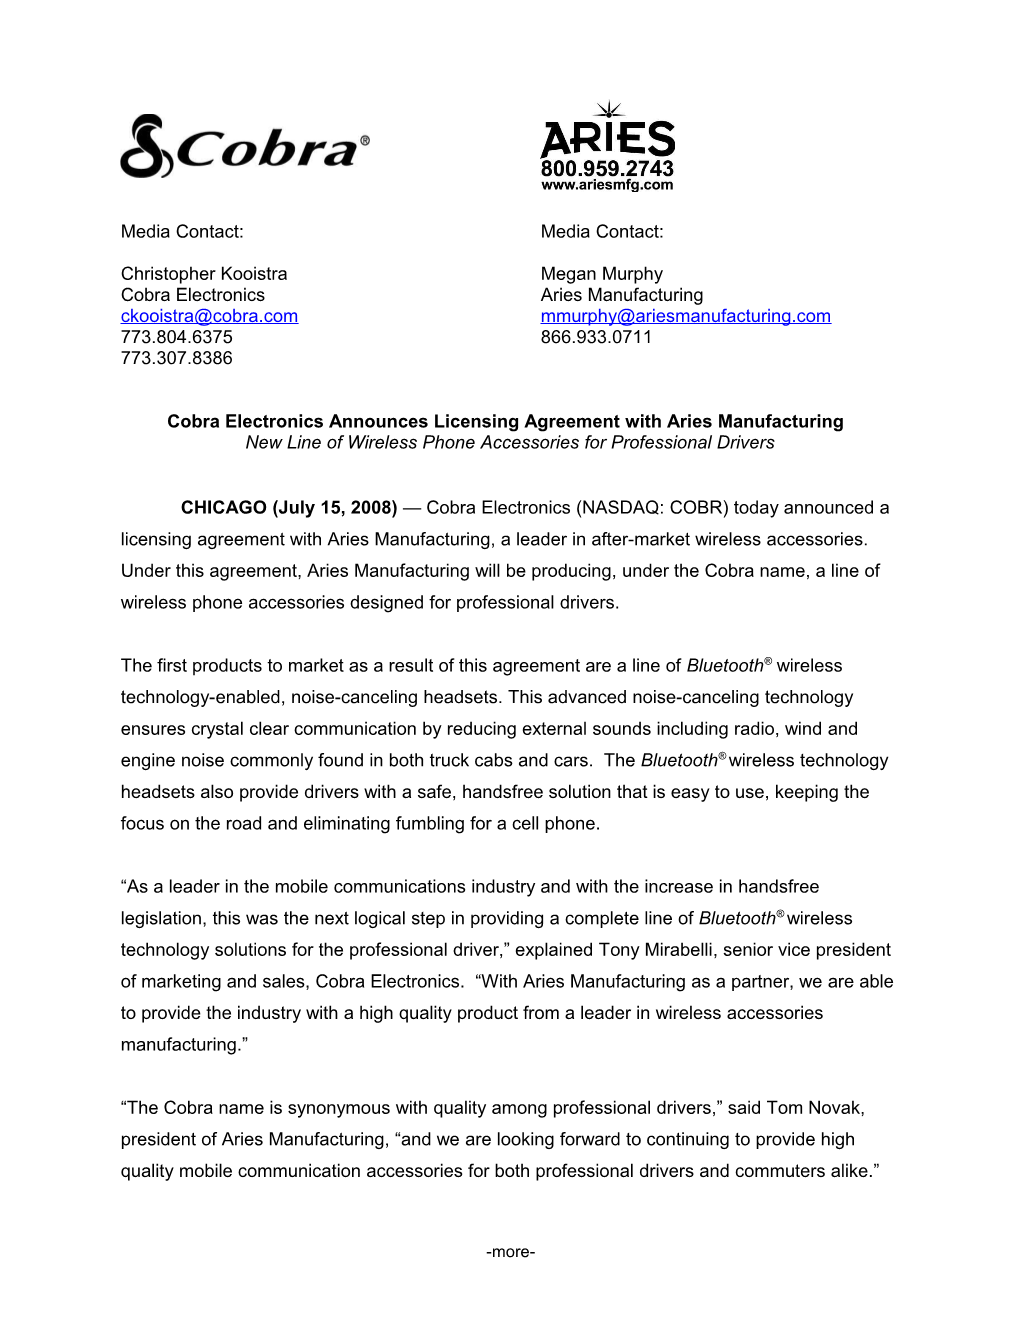 Cobra Electronics License Agreement News Release